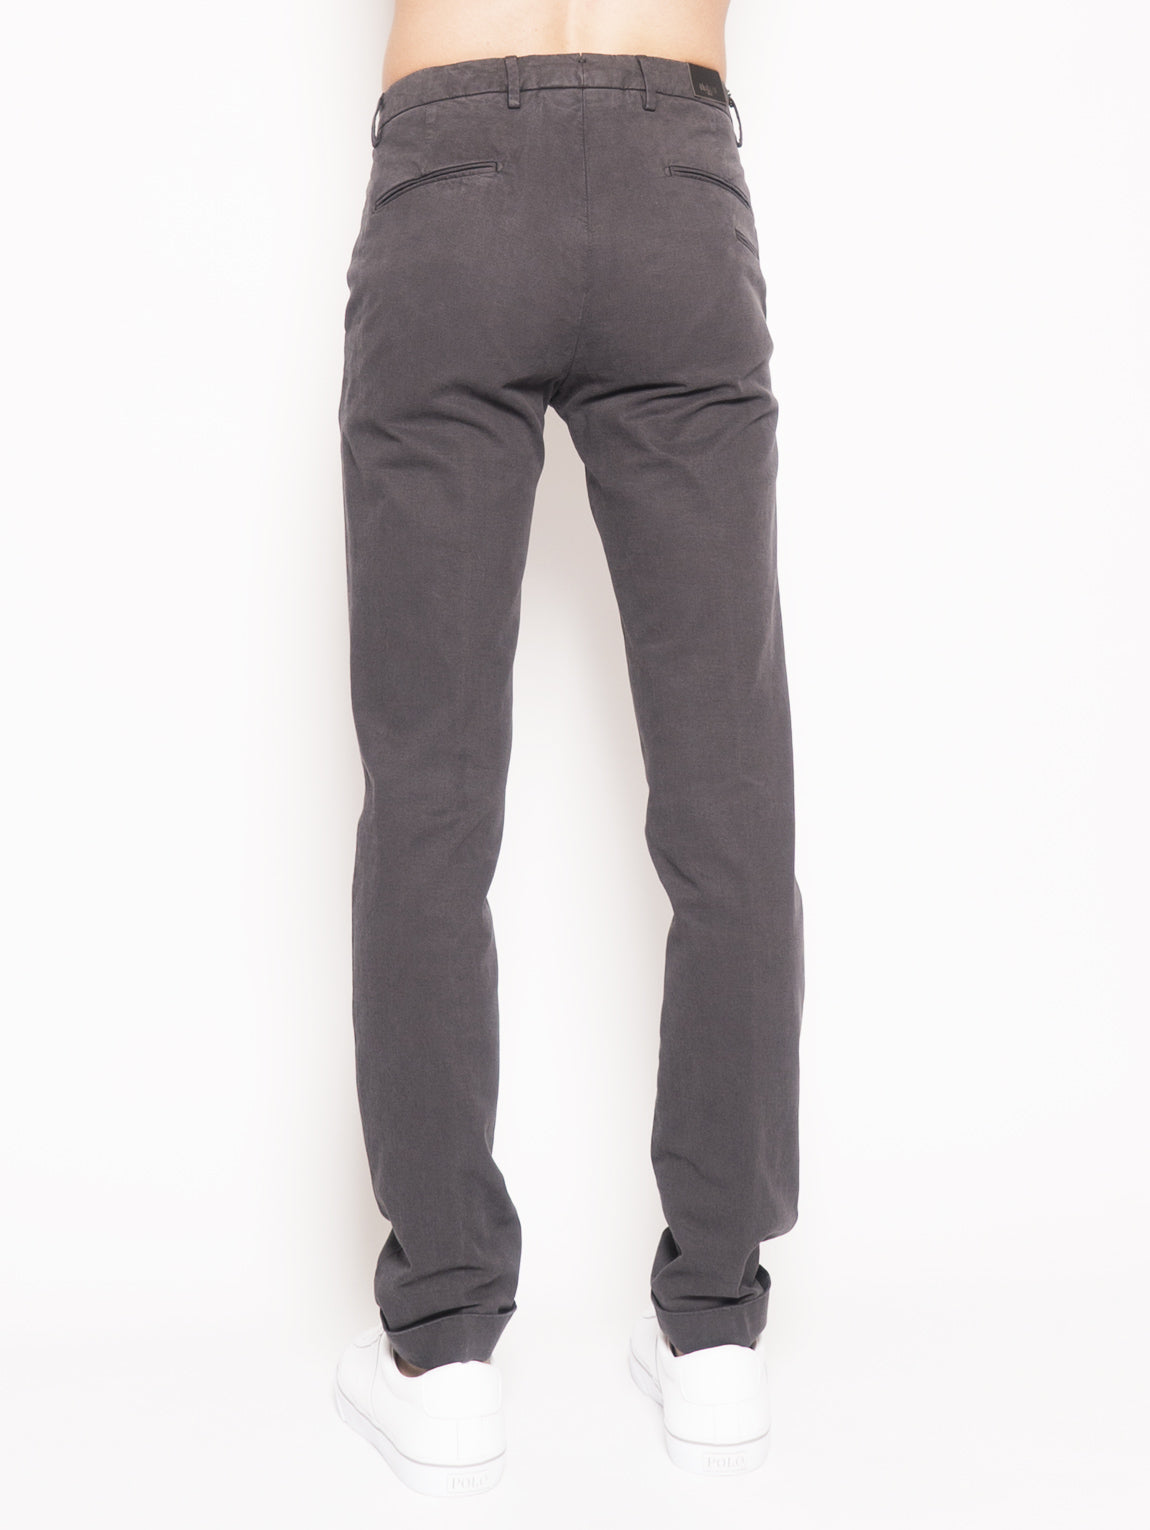 Grey chino trousers